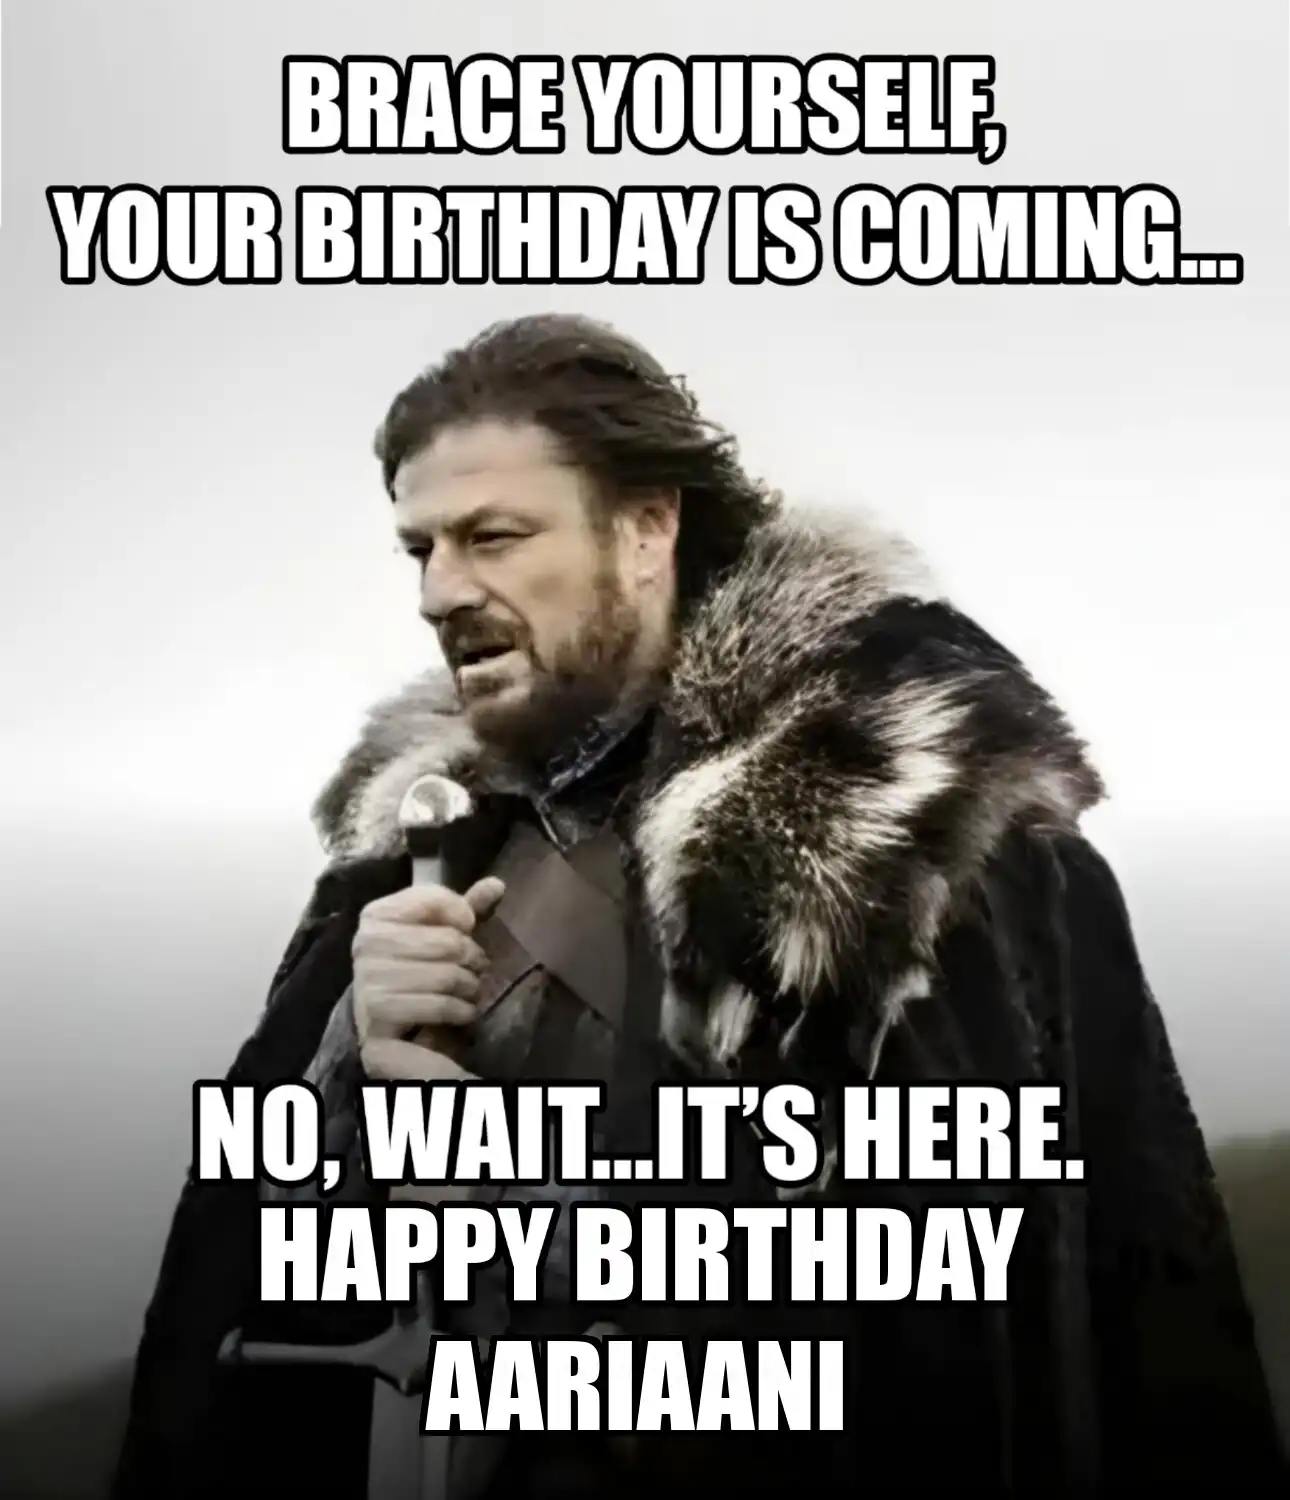 Happy Birthday Aariaani Brace Yourself Your Birthday Is Coming Meme